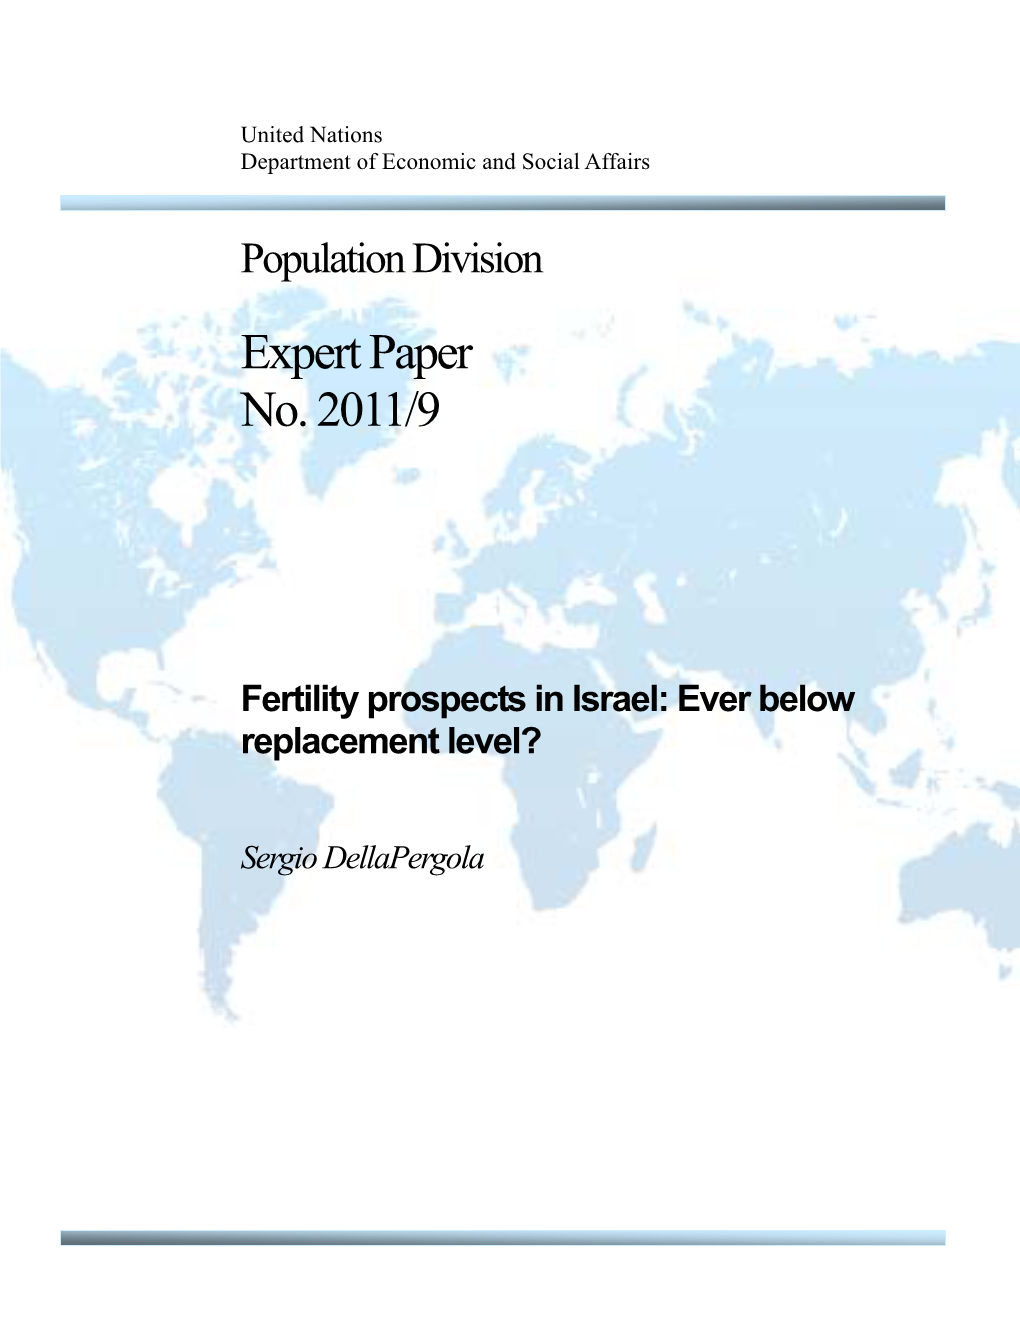 Population Division Expert Paper No